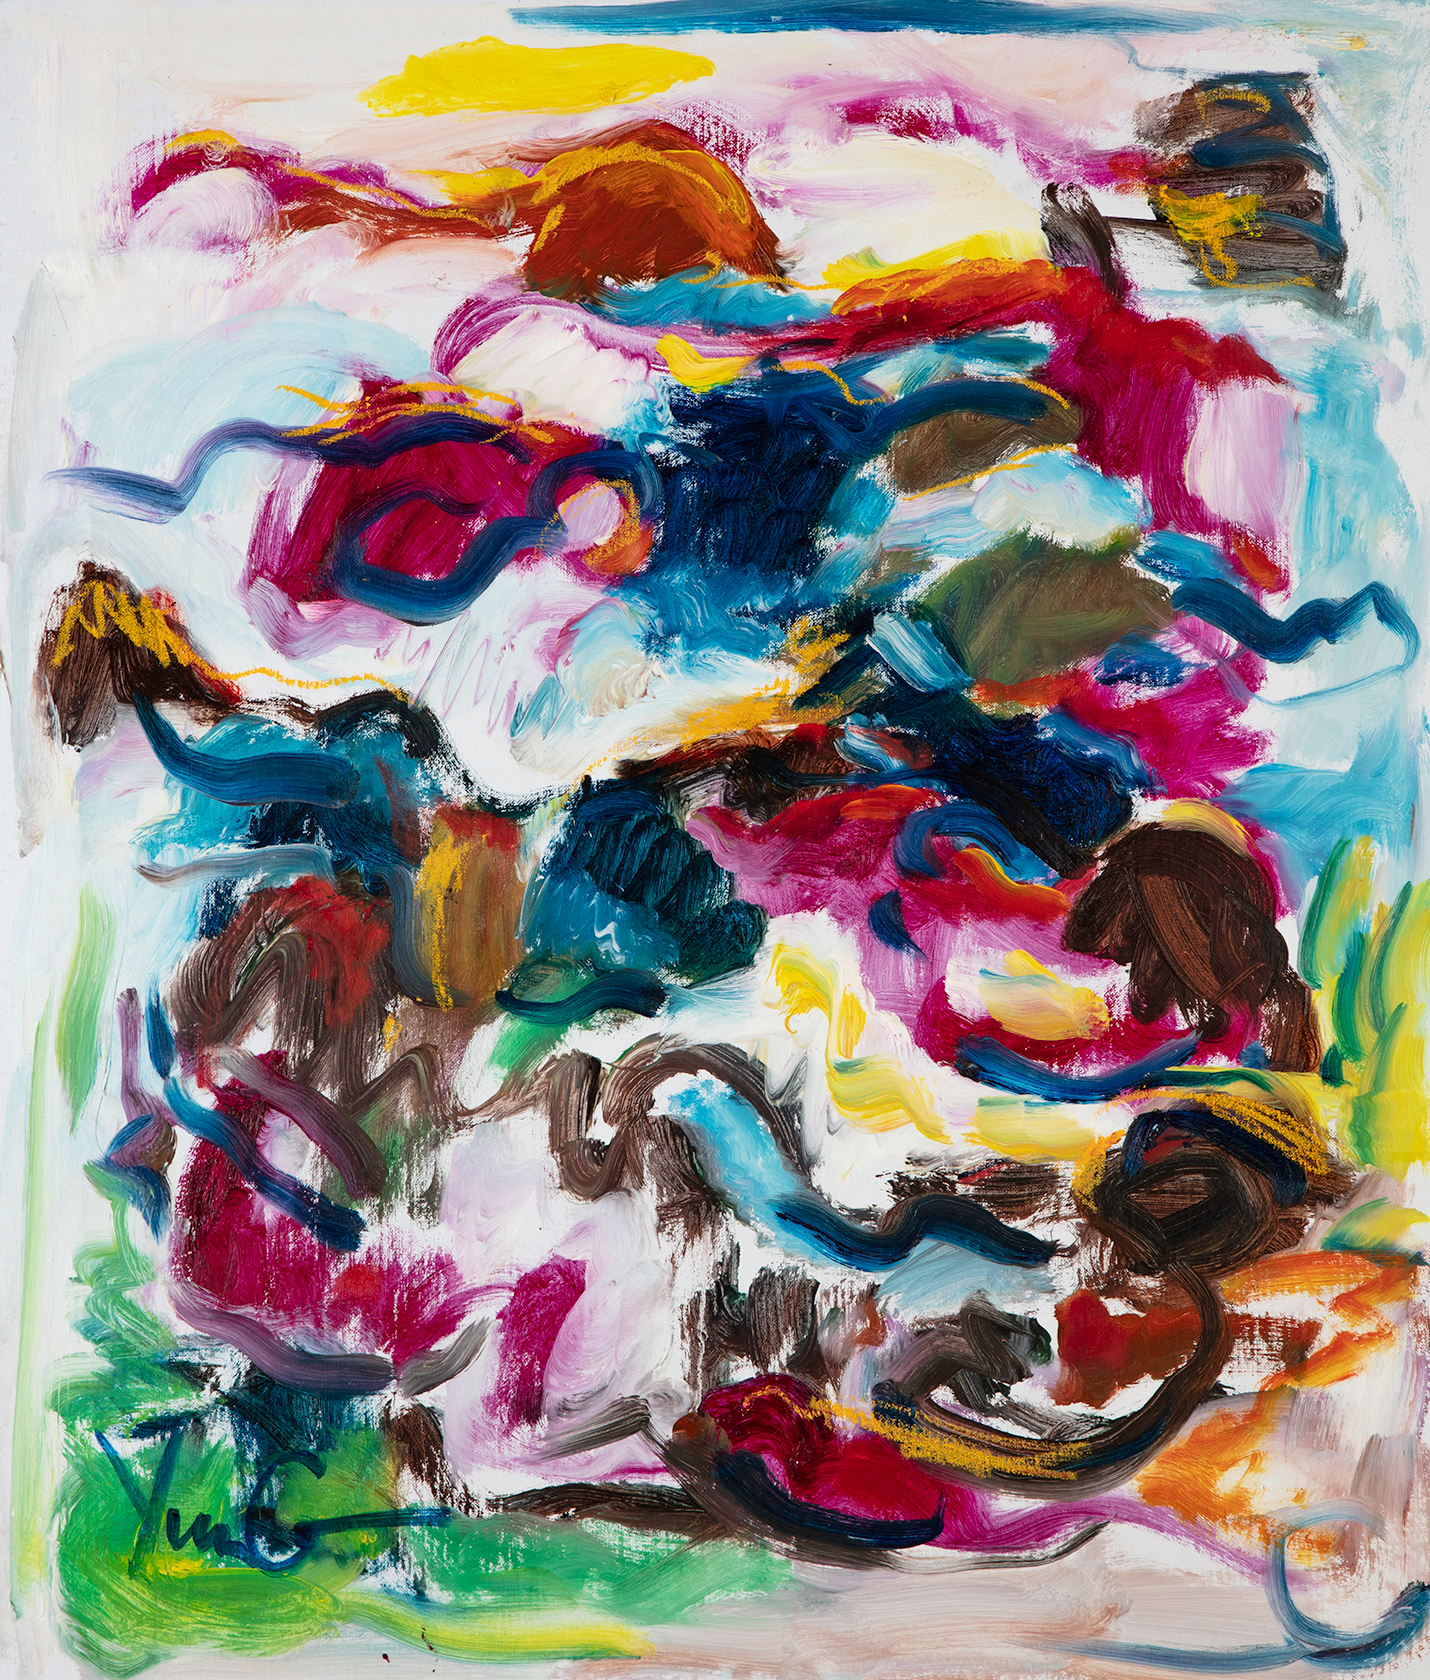 Dorothy Yung - PLUM GARDEN #2 - Oil on canvas - 2019